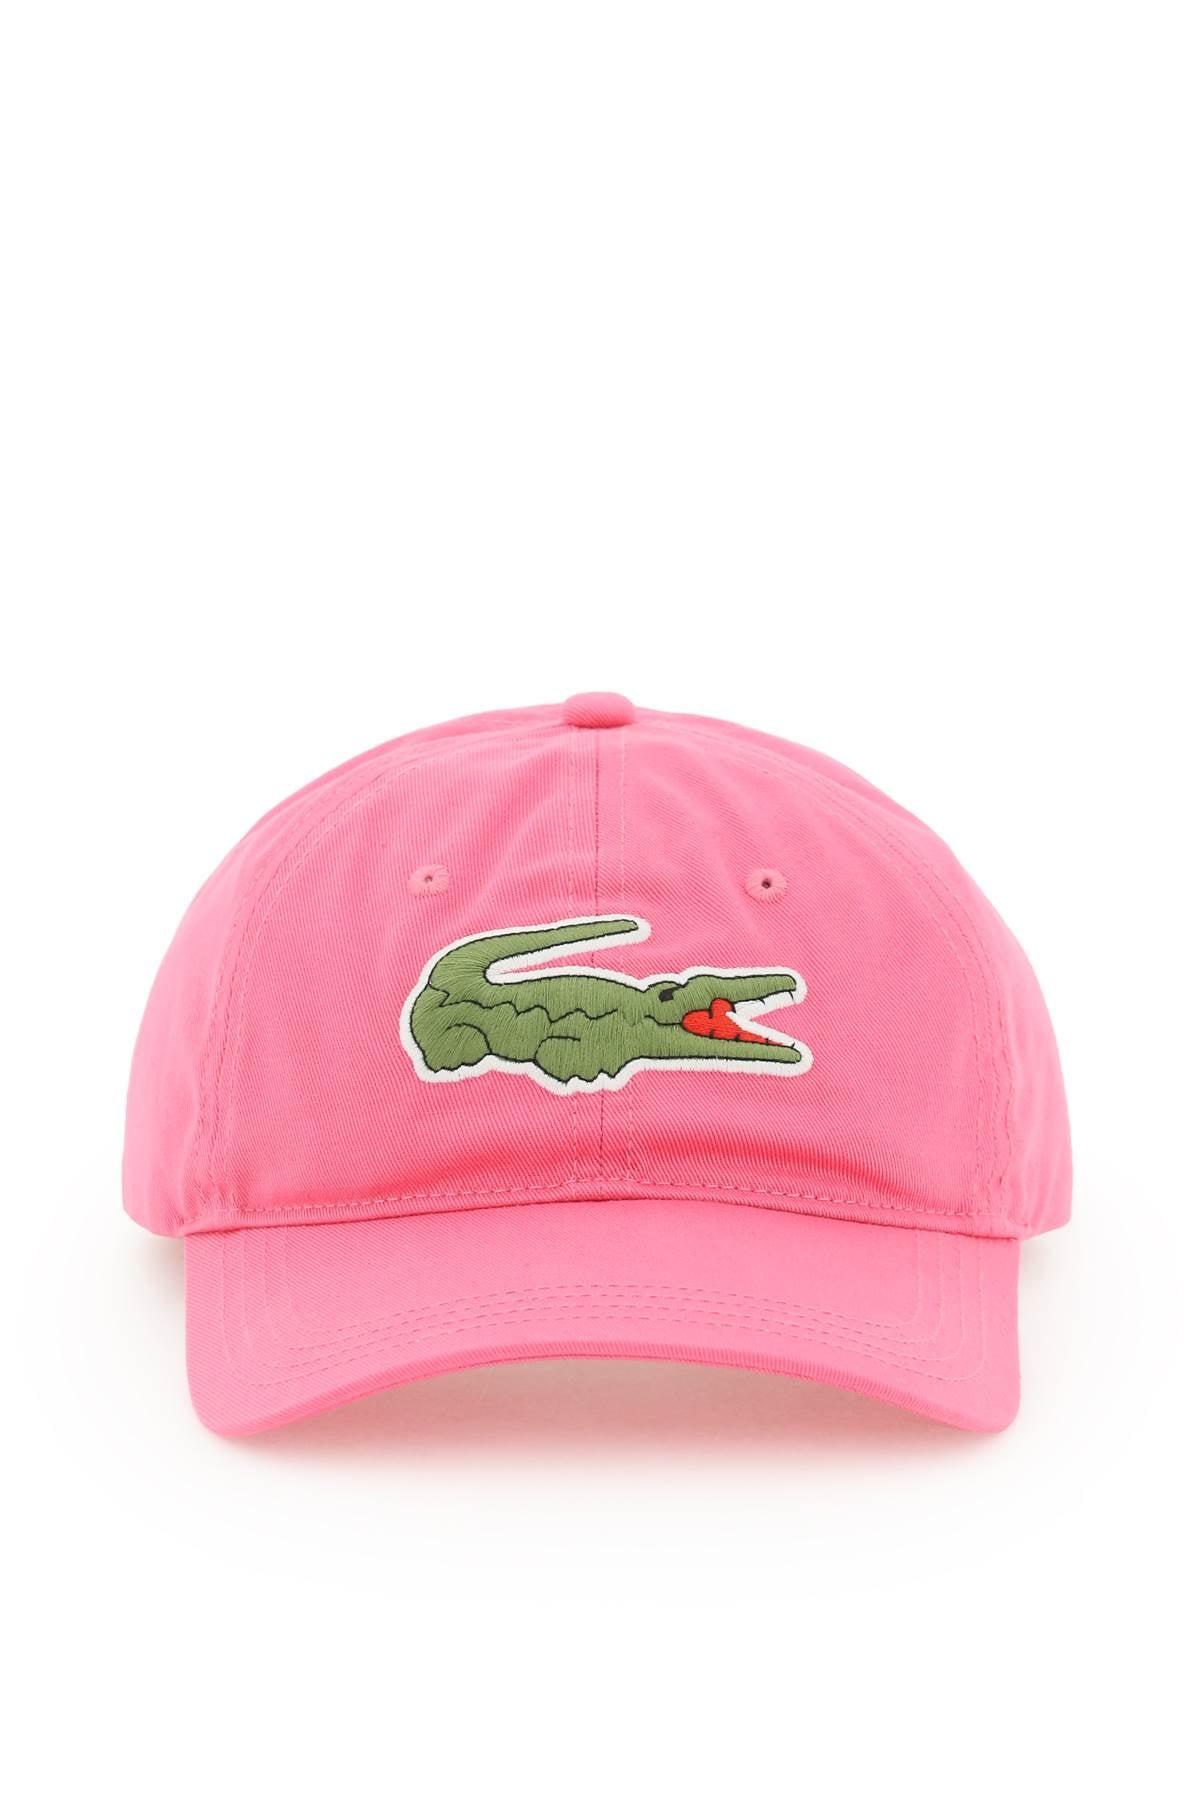 Lyst | Men for Pink Cap Logo in Baseball Lacoste